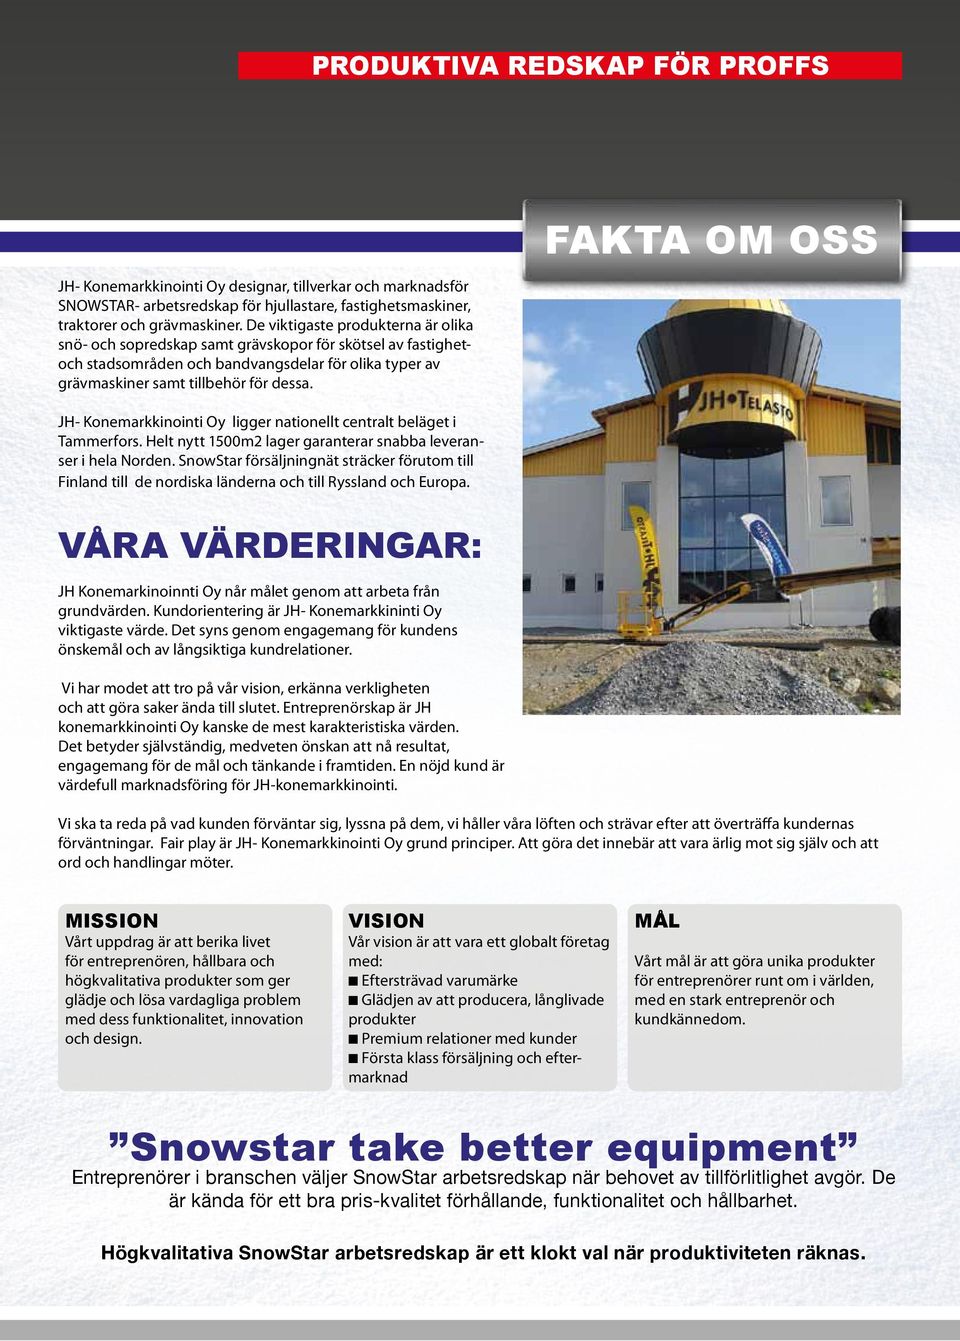 FAKTA OM OSS JH- Konemarkkinointi Oy ligger nationellt centralt beläget i Tammerfors. Helt nytt 1500m2 lager garanterar snabba leveranser i hela Norden.